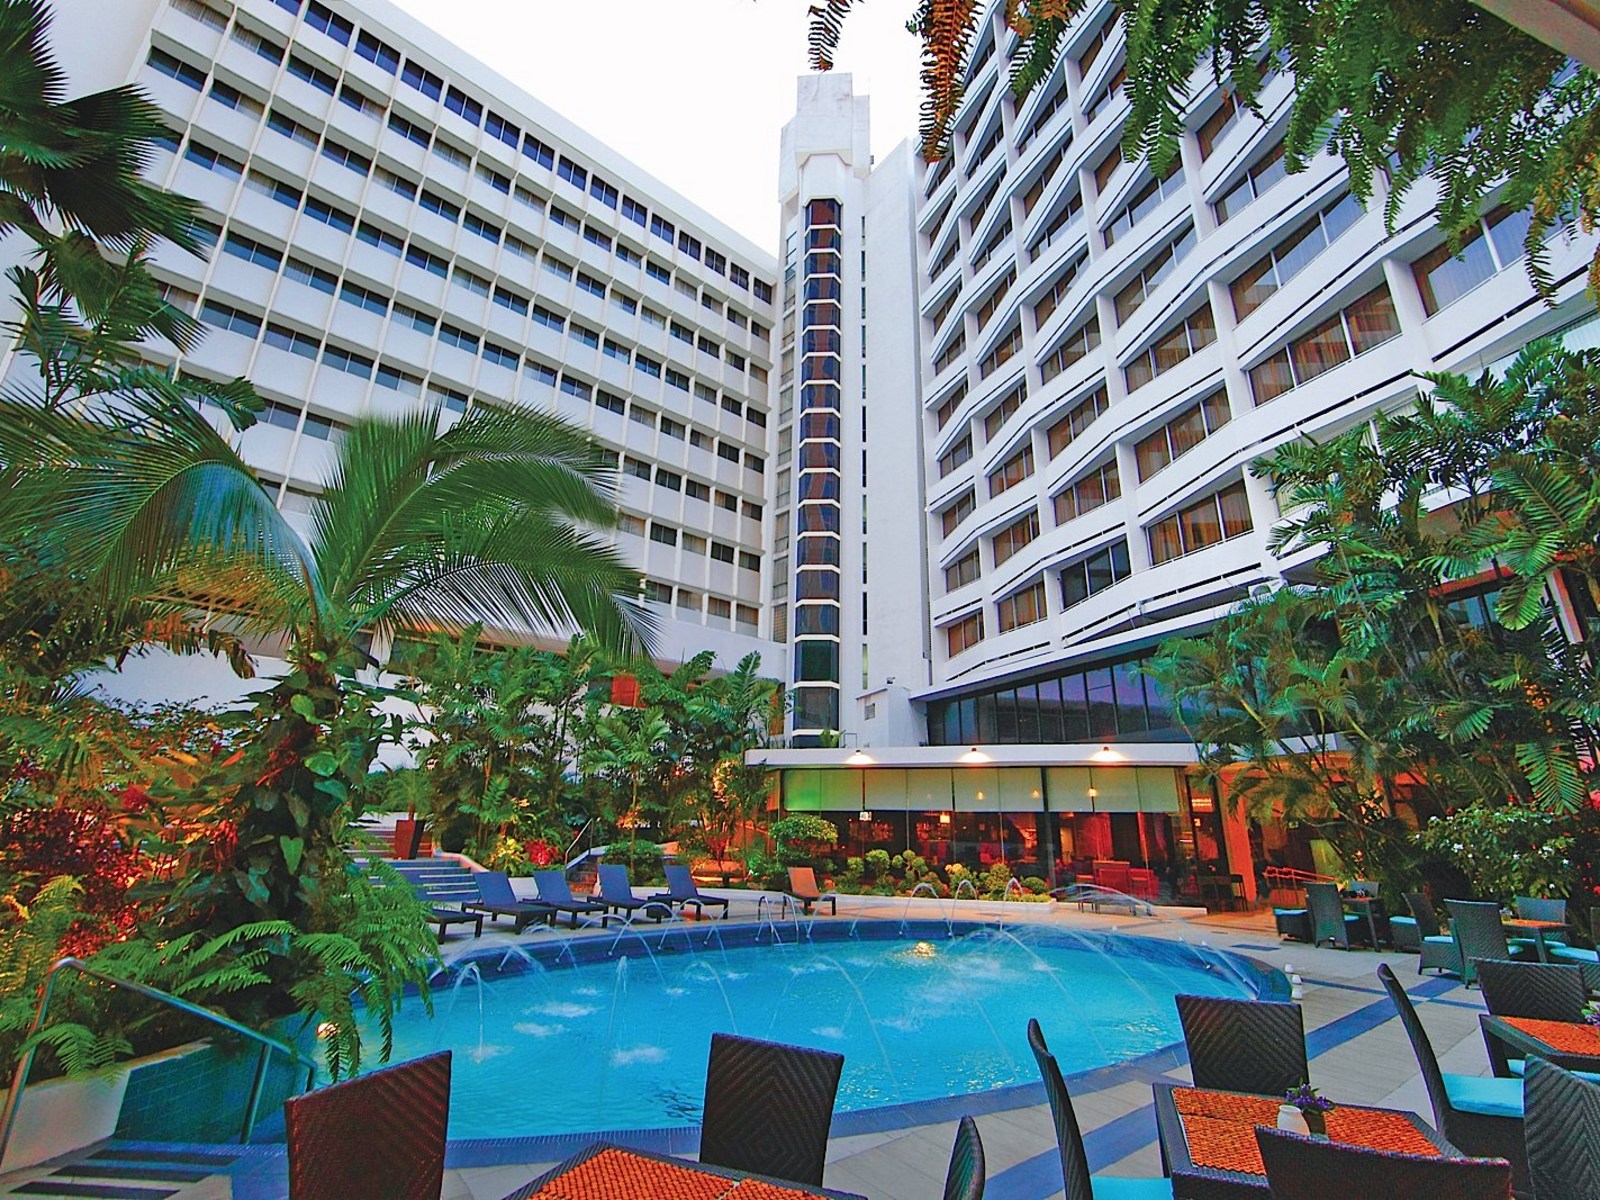 Panama City Continental Hotel Casino4 